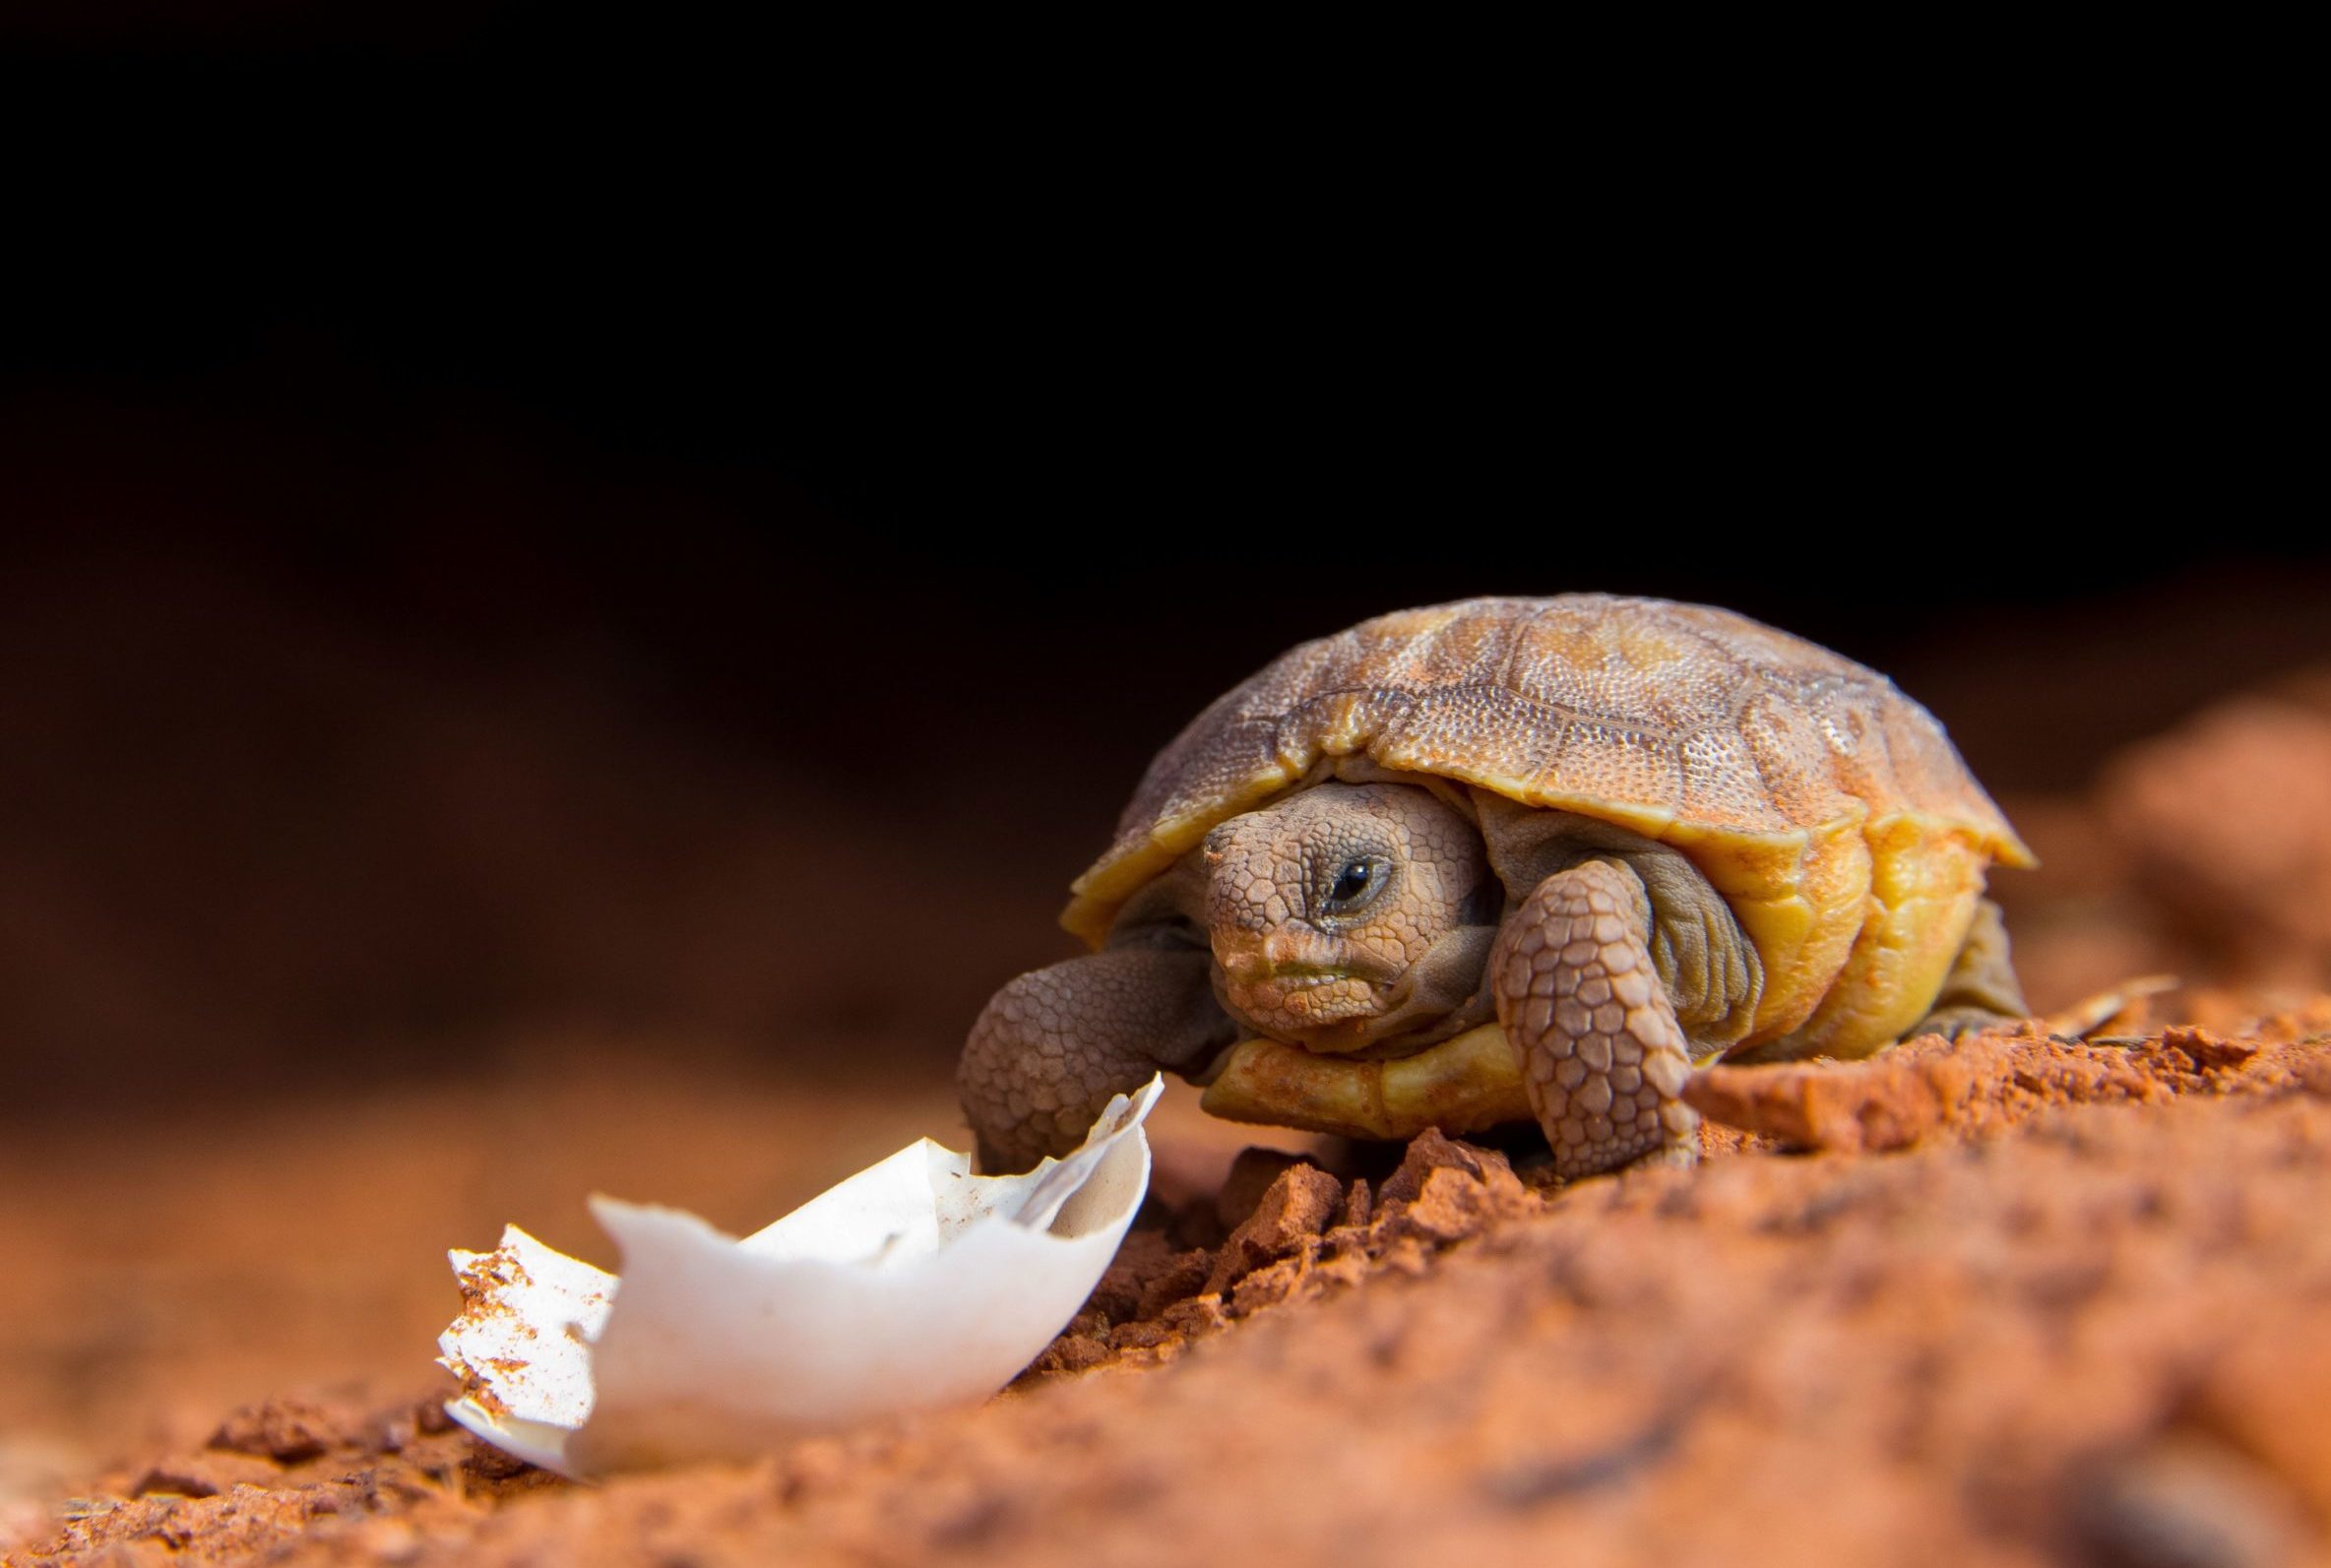 Hatchling Tortoise